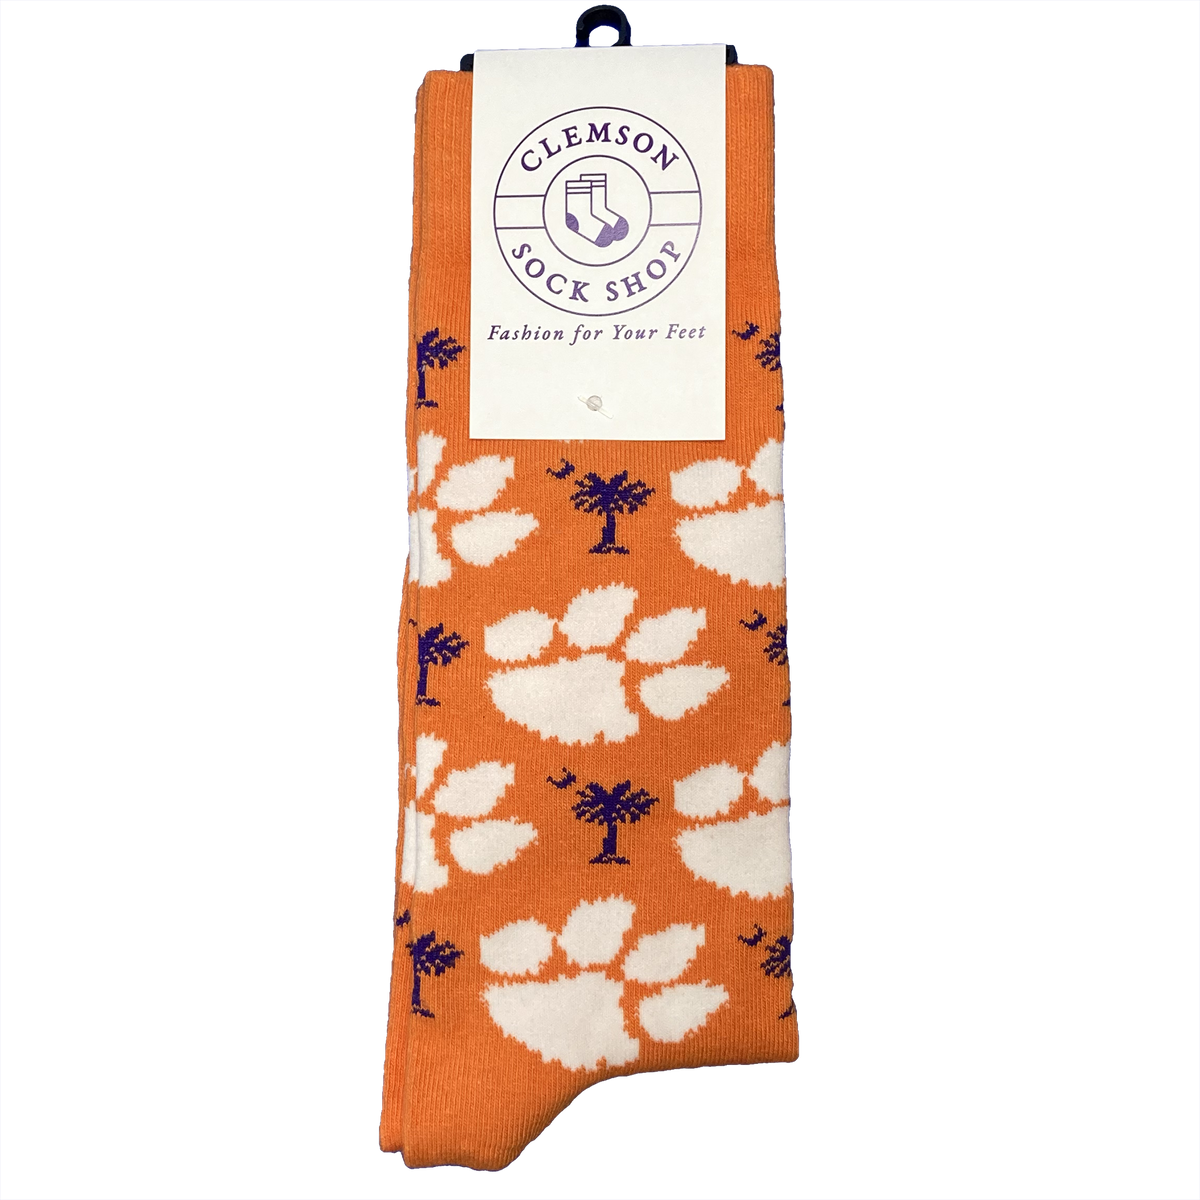 Clemson Orange Socks with White Paw and Palmetto